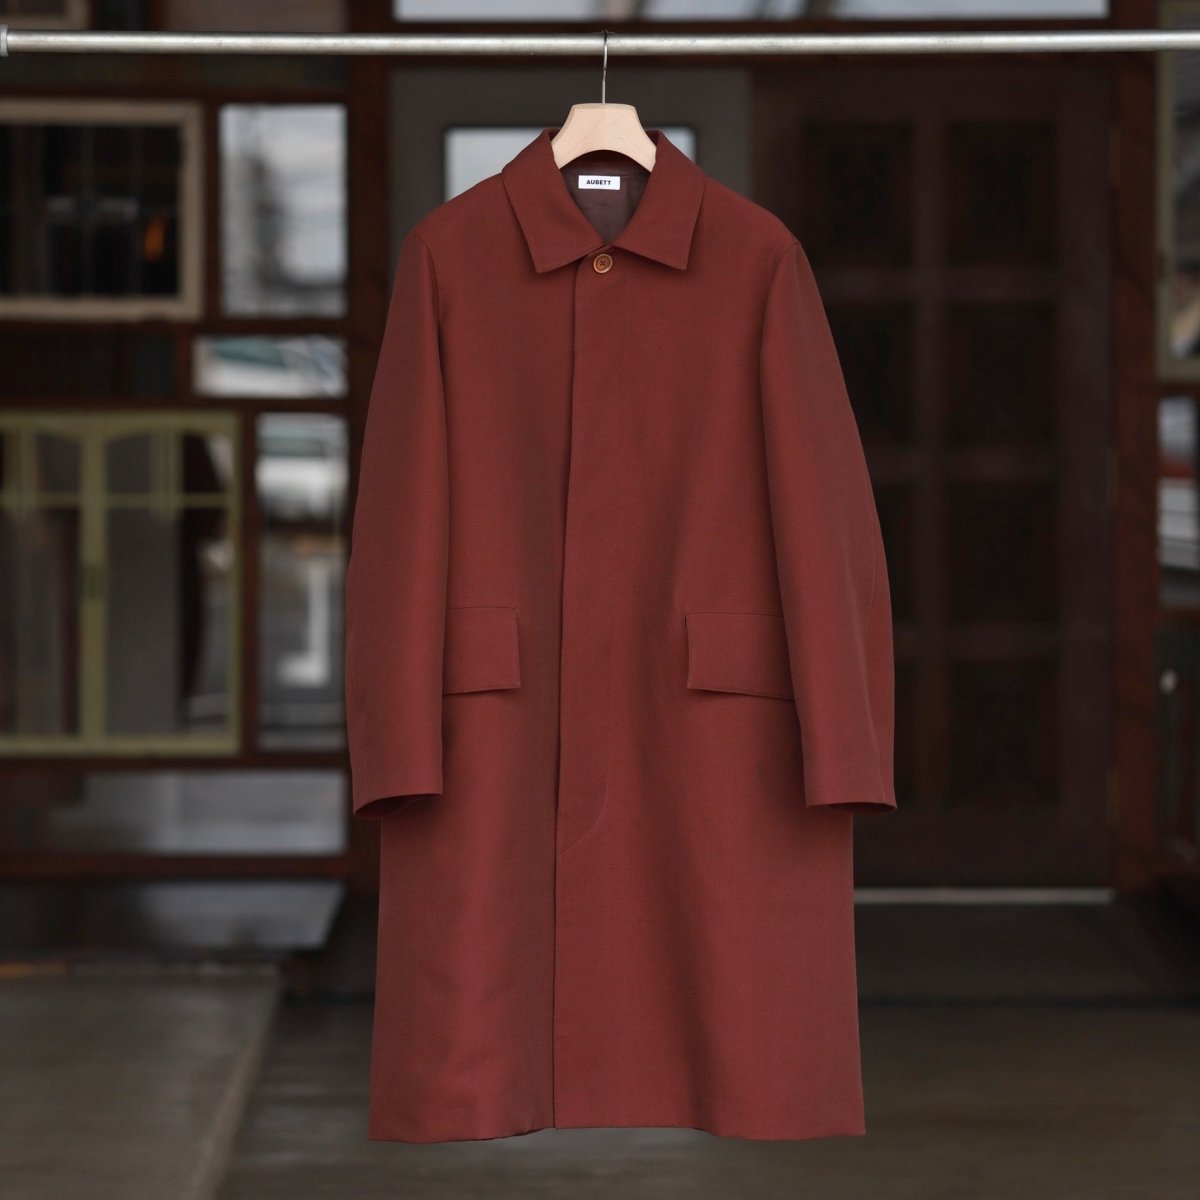 aubett-private-public-collection-001-inverted-pleats-over-coat-red-rust-1